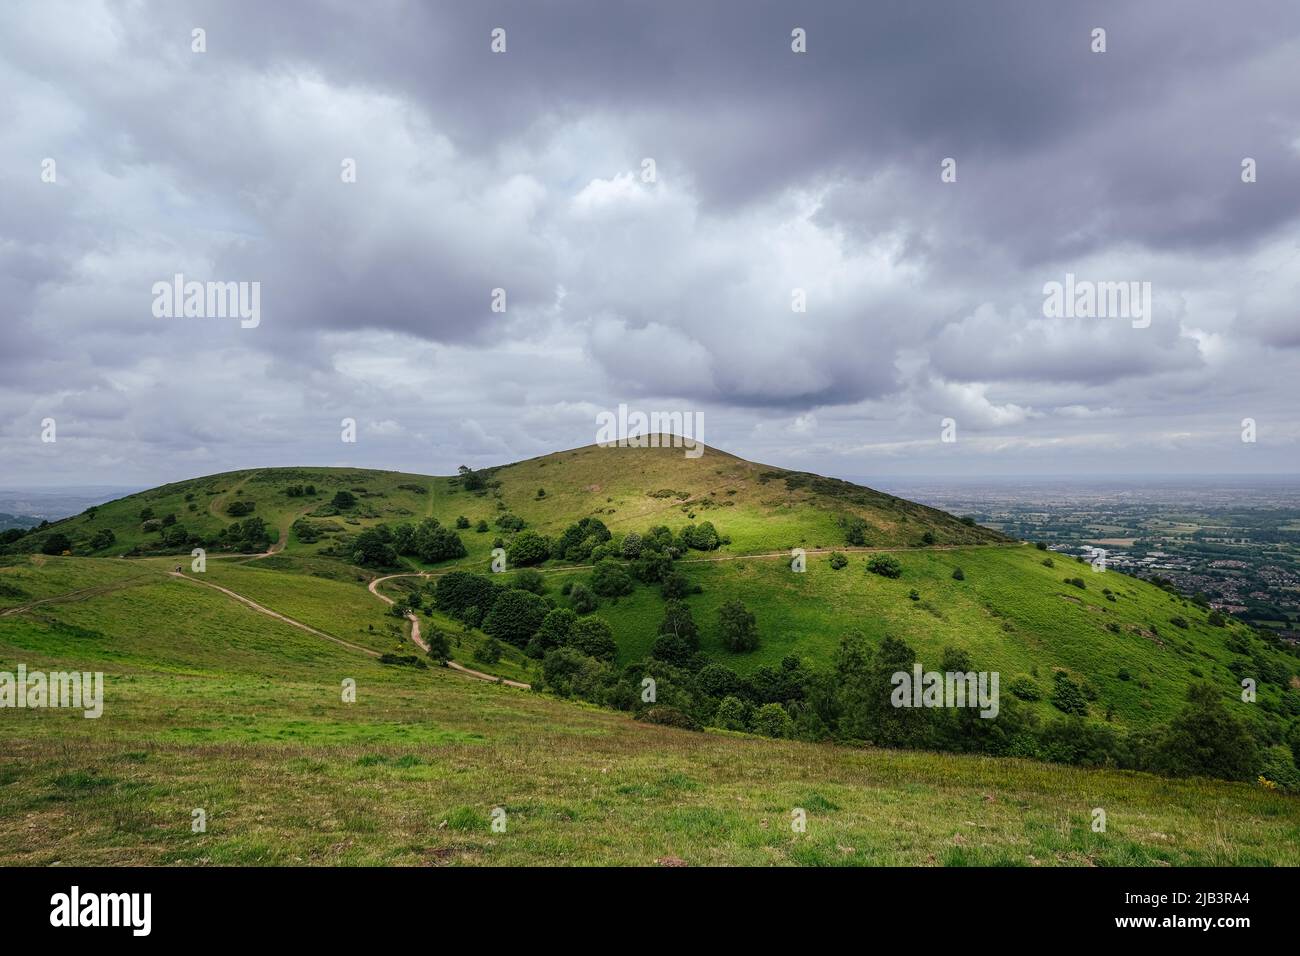 Malvern Hills - under stormy skies Stock Photo